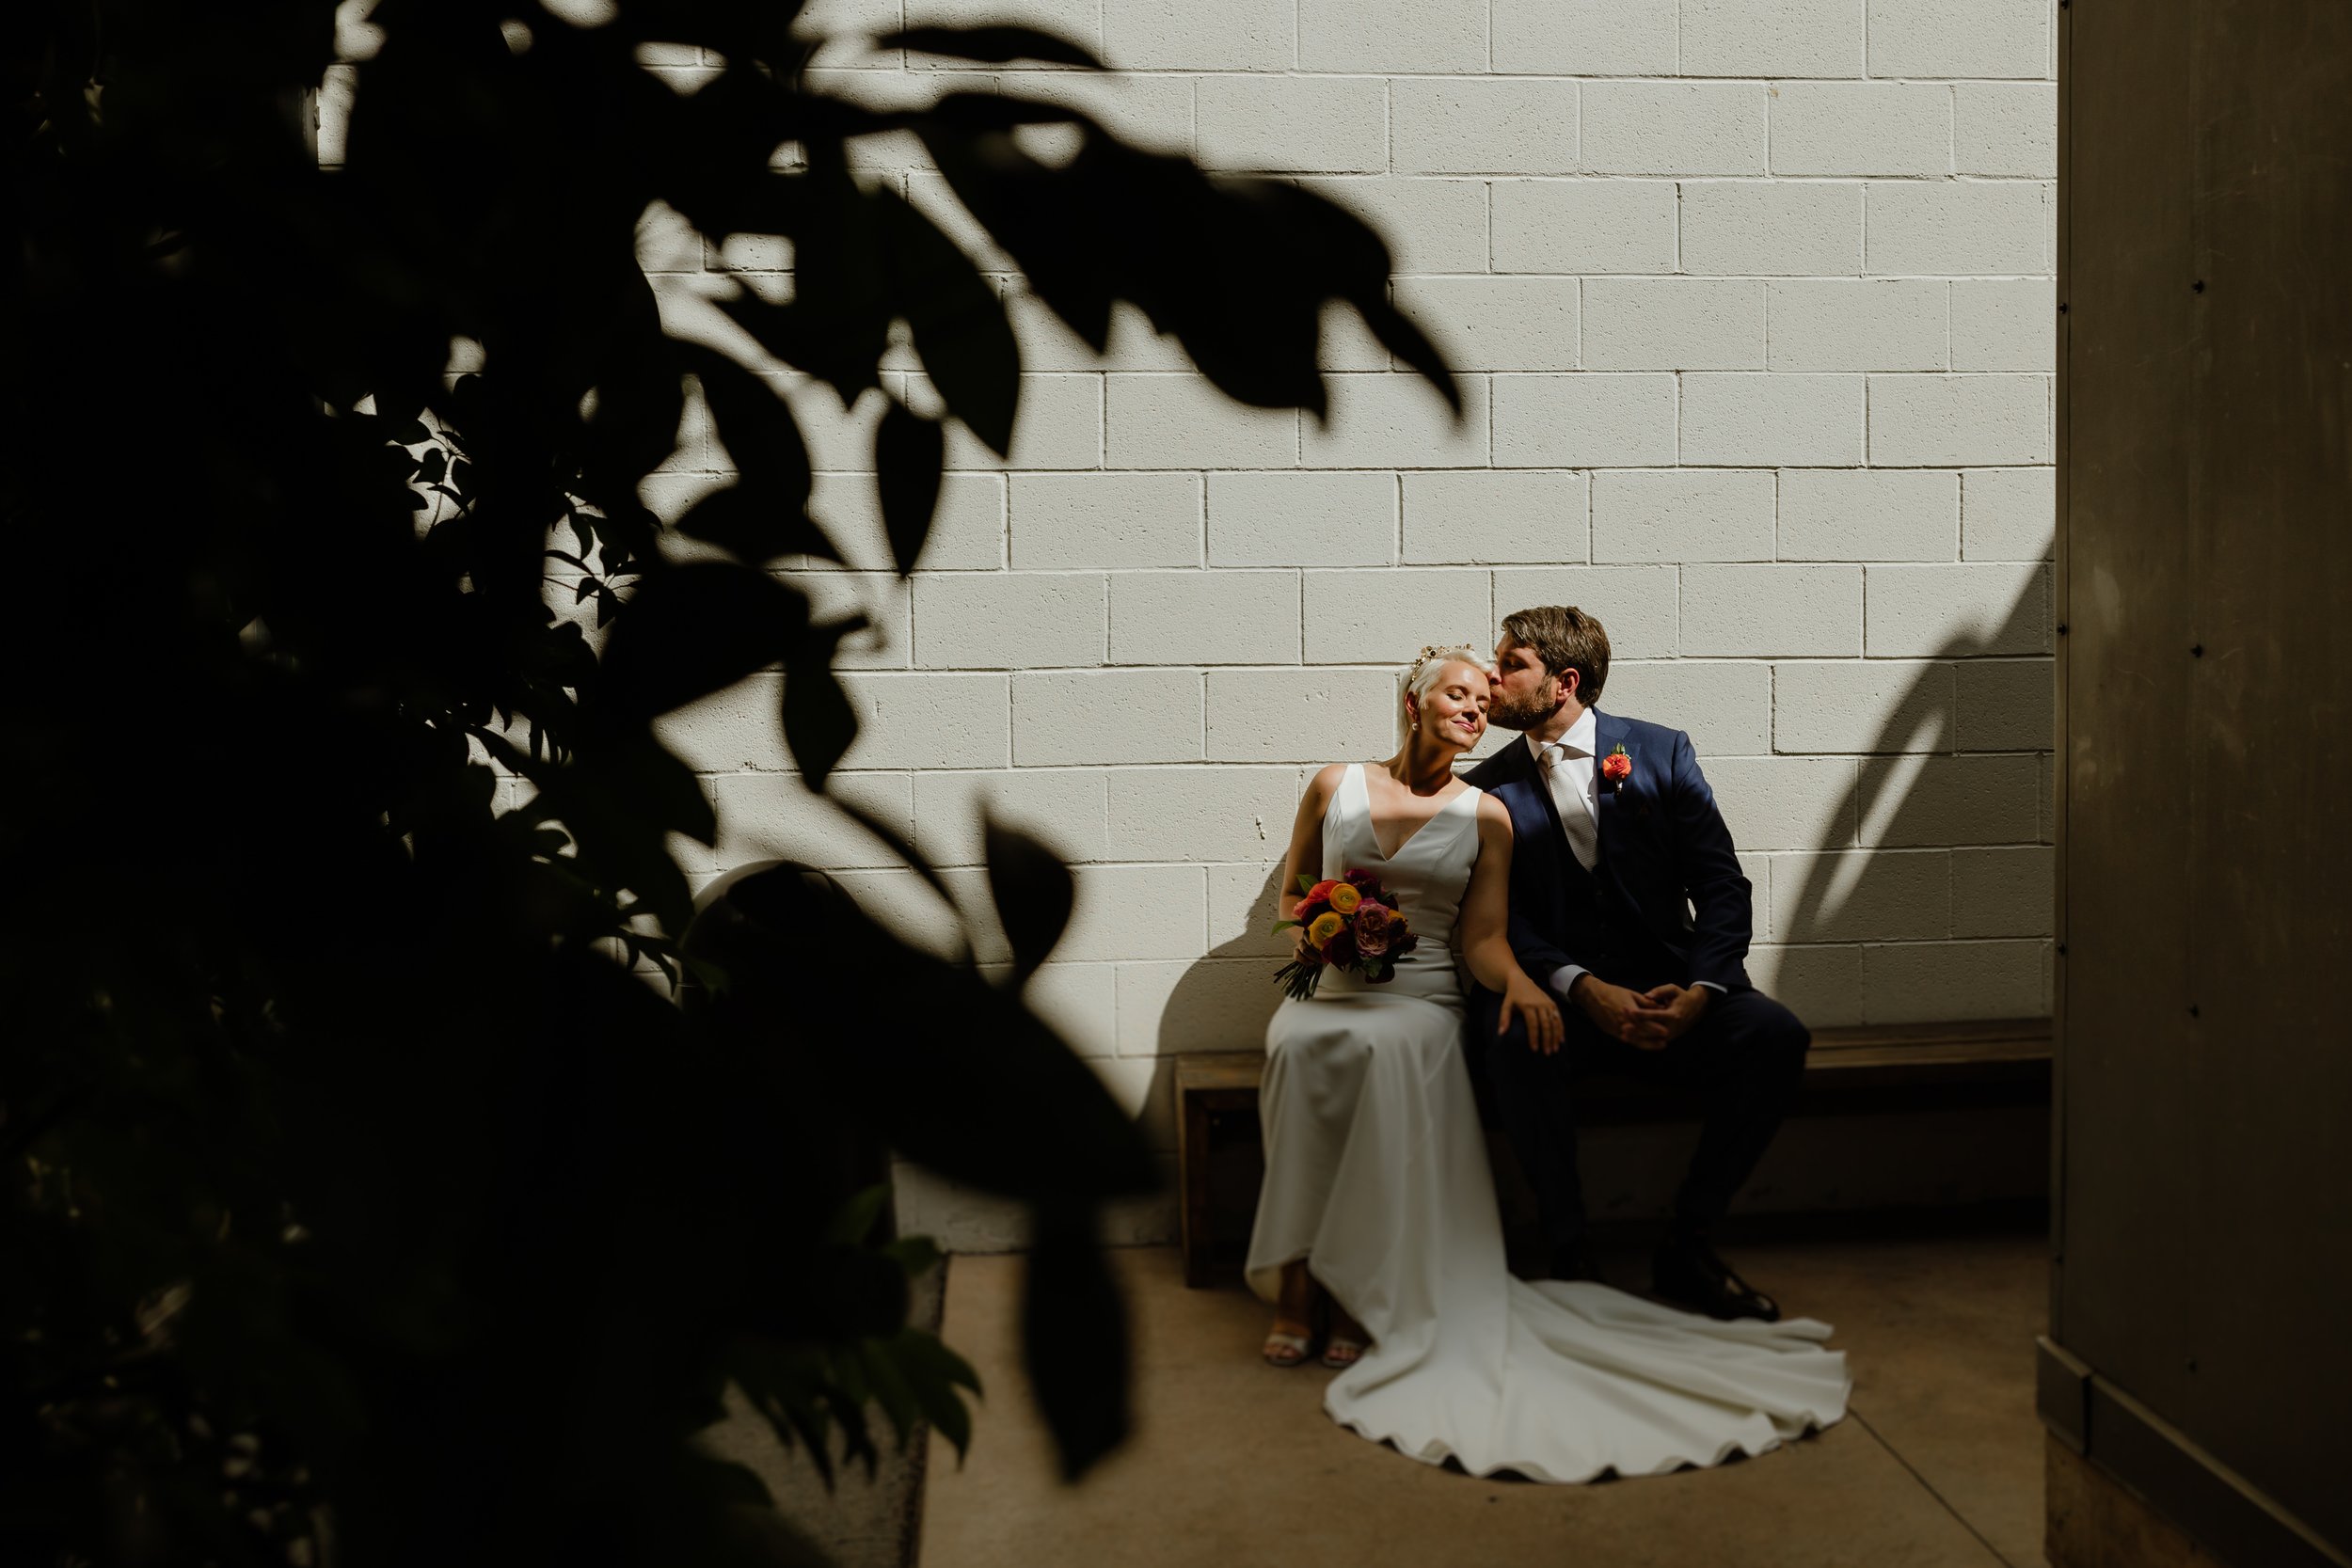  Ali + Jack Wedding at Millwick DTLA - Eve Rox Photography 